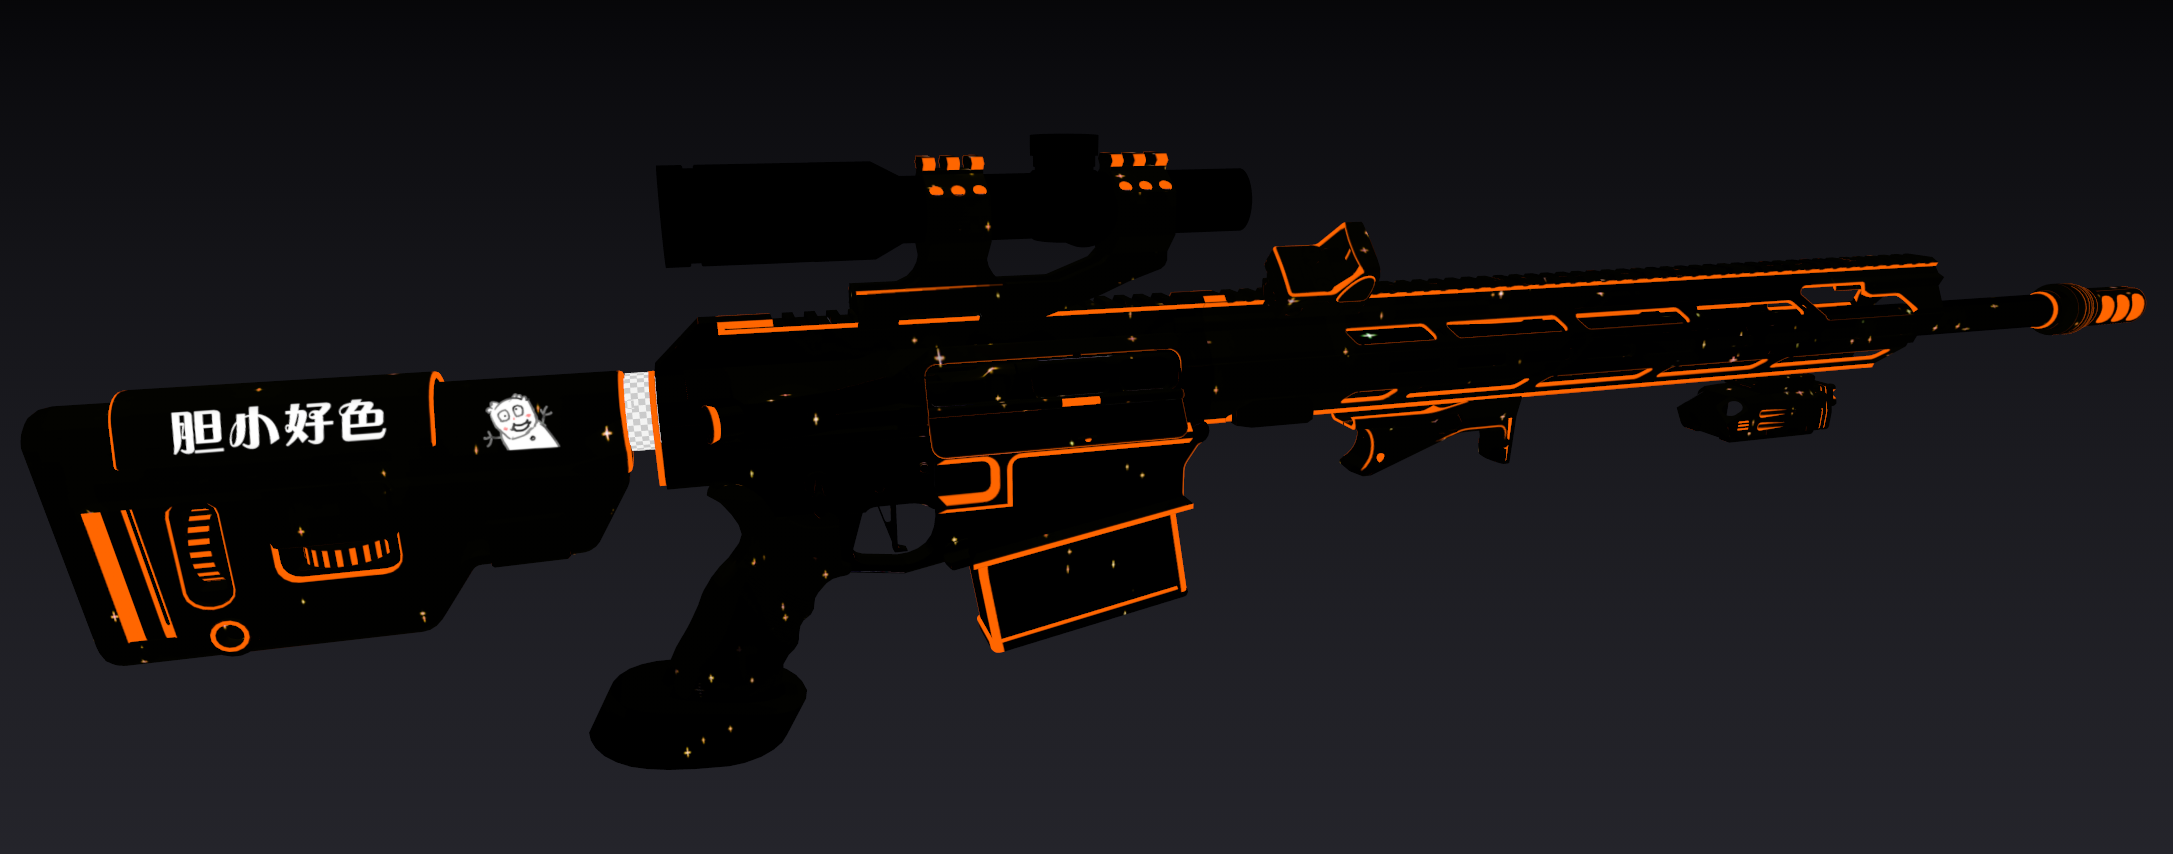 【AKI 12.11】橘子重型狙击枪-MK18 定制独立发光武器皮肤【みらき】